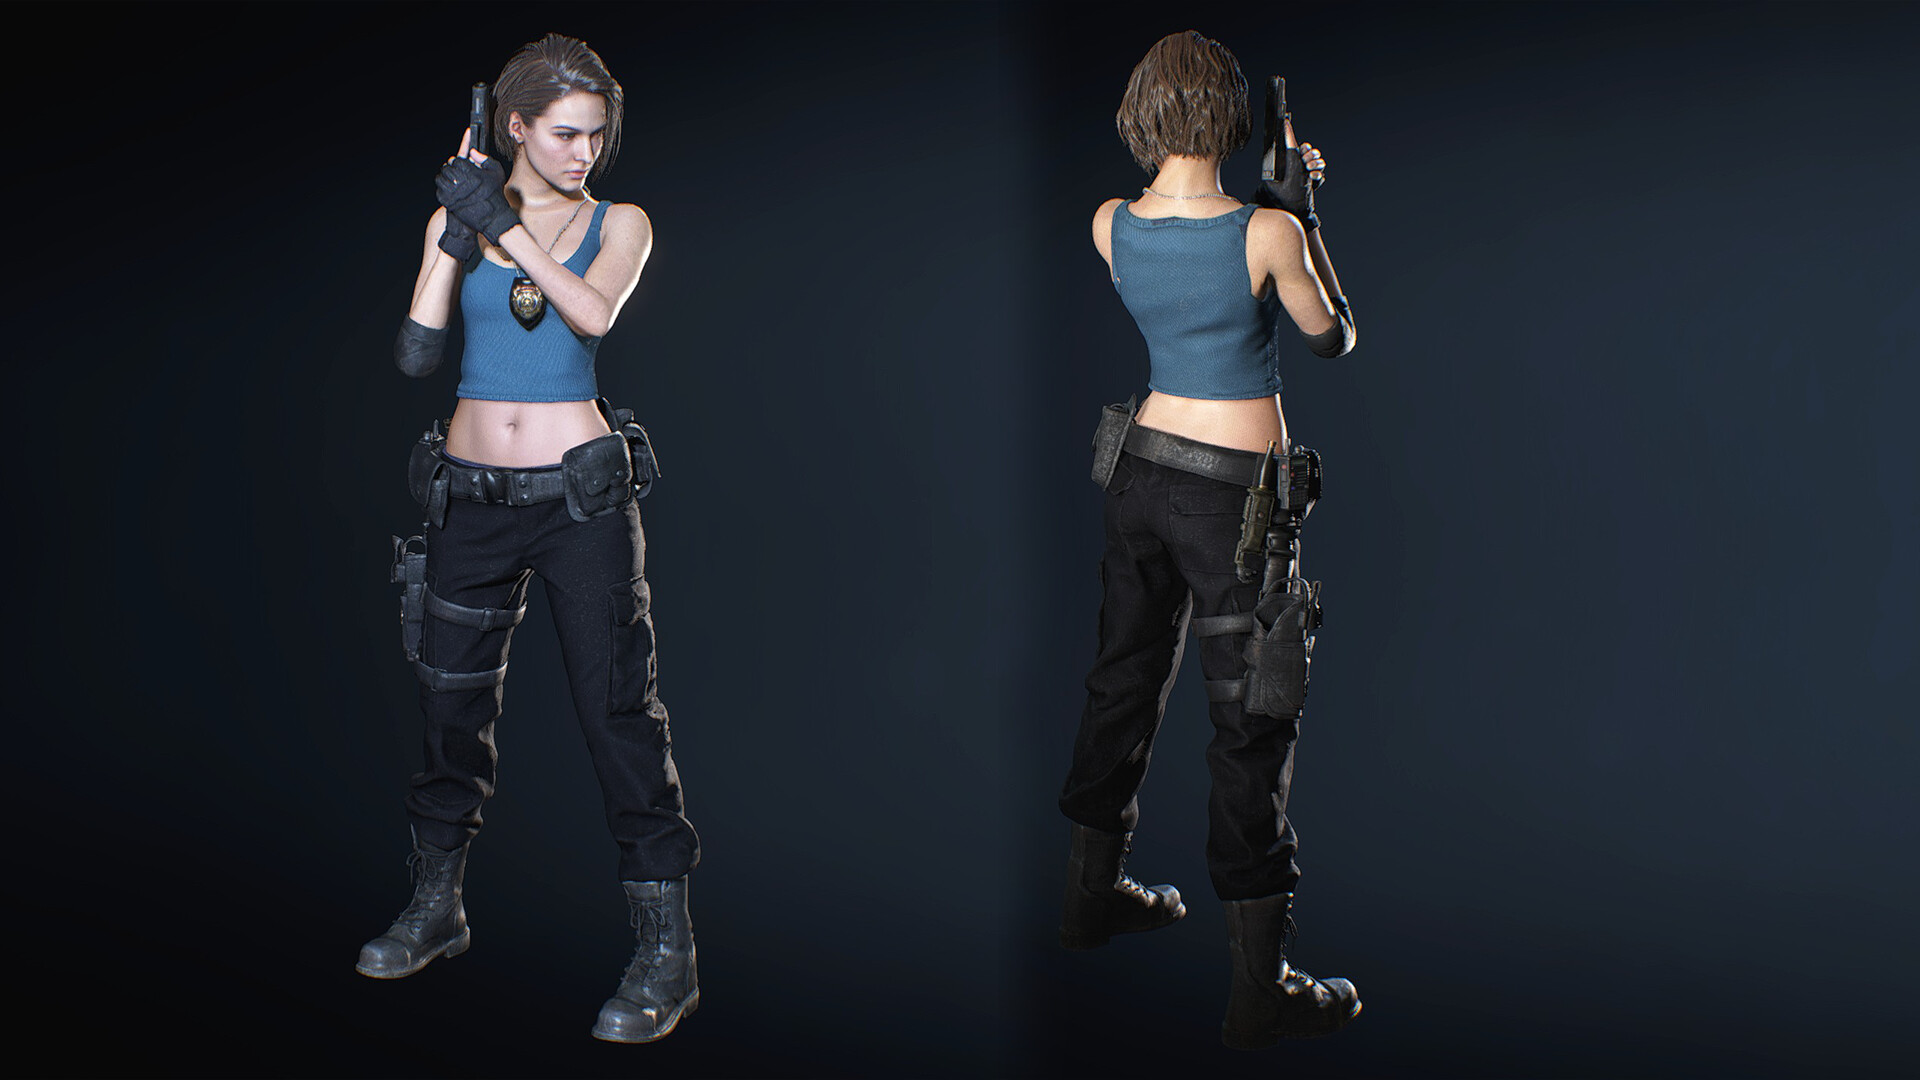 Jill Resident evil 3 Original Concept Fanart.